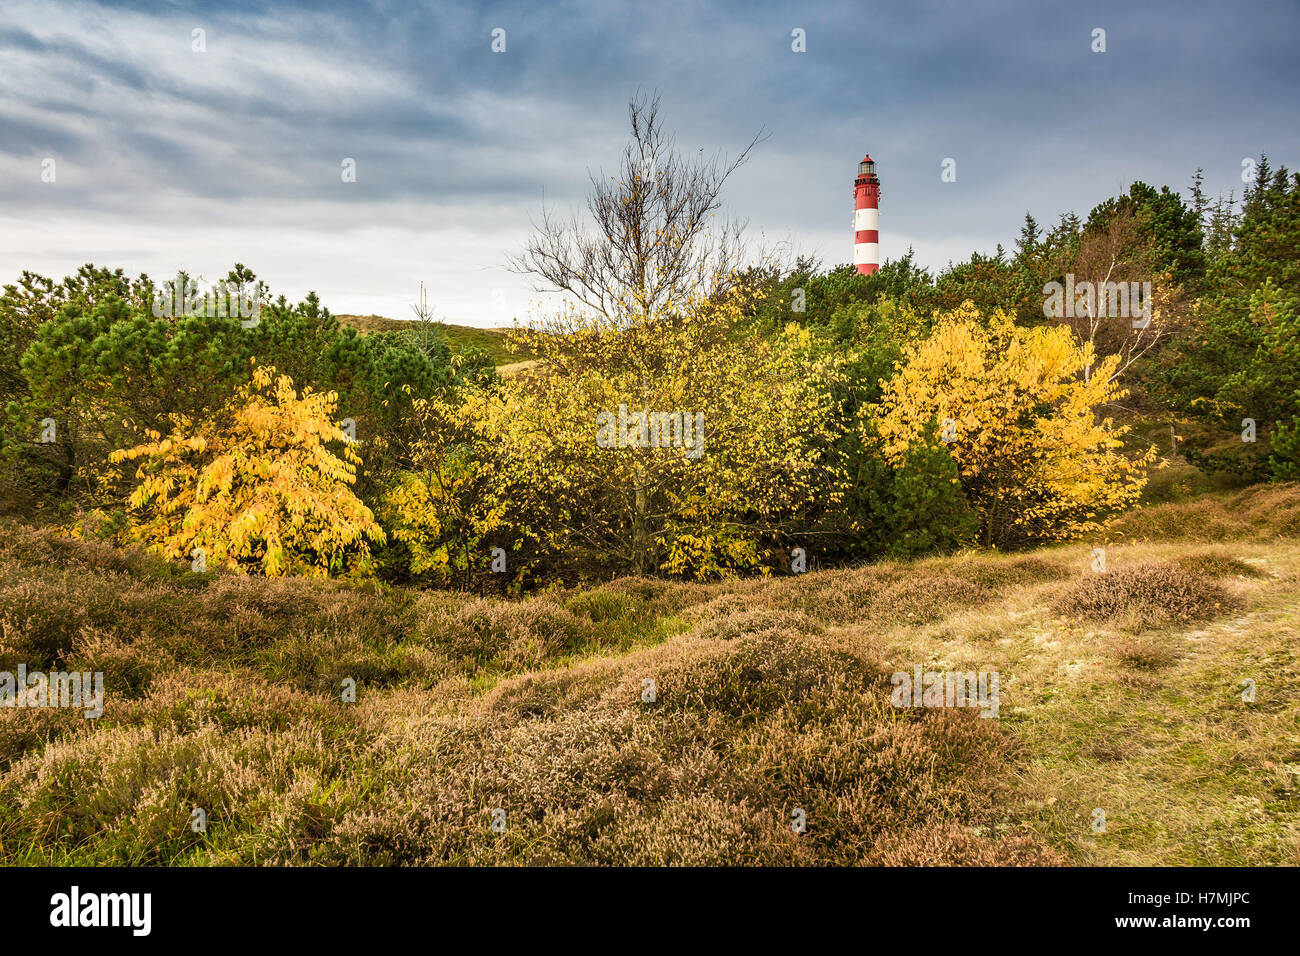 Lighthouse in Wittduen on the island Amrum, Germany Stock Photo